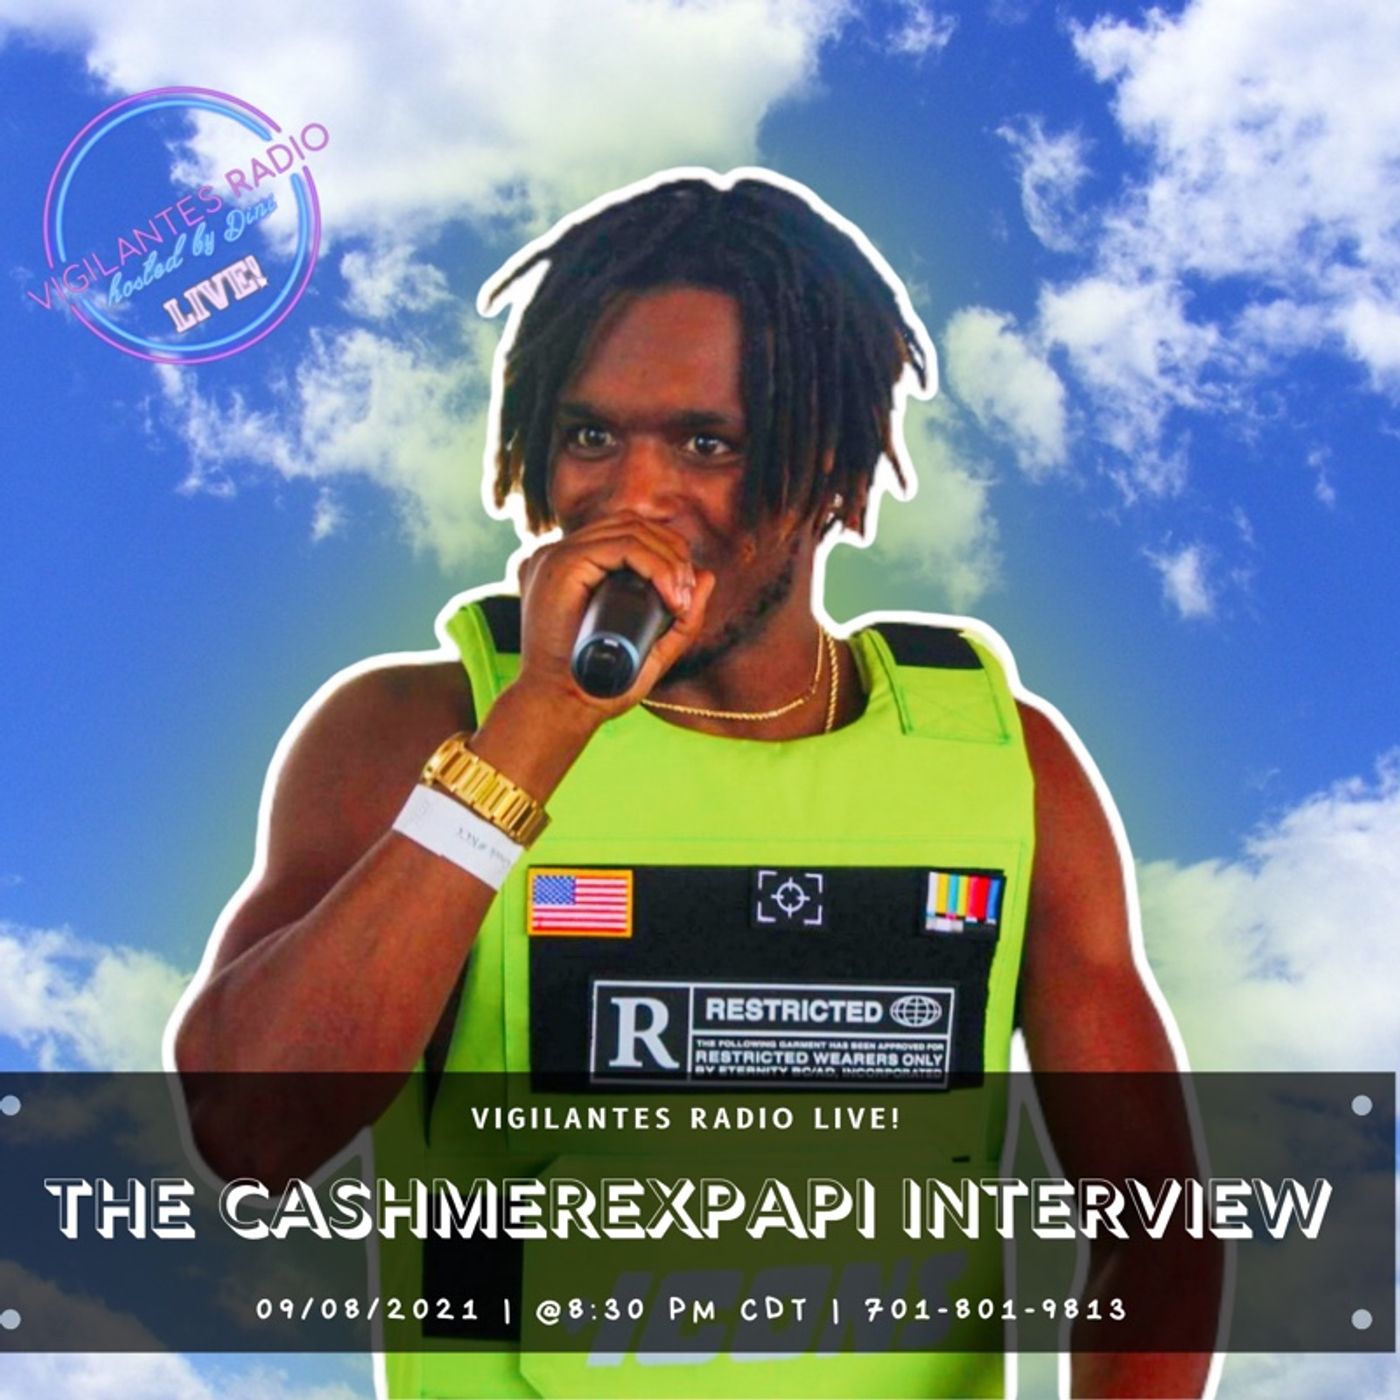 The CashmerexPapi Interview. Image